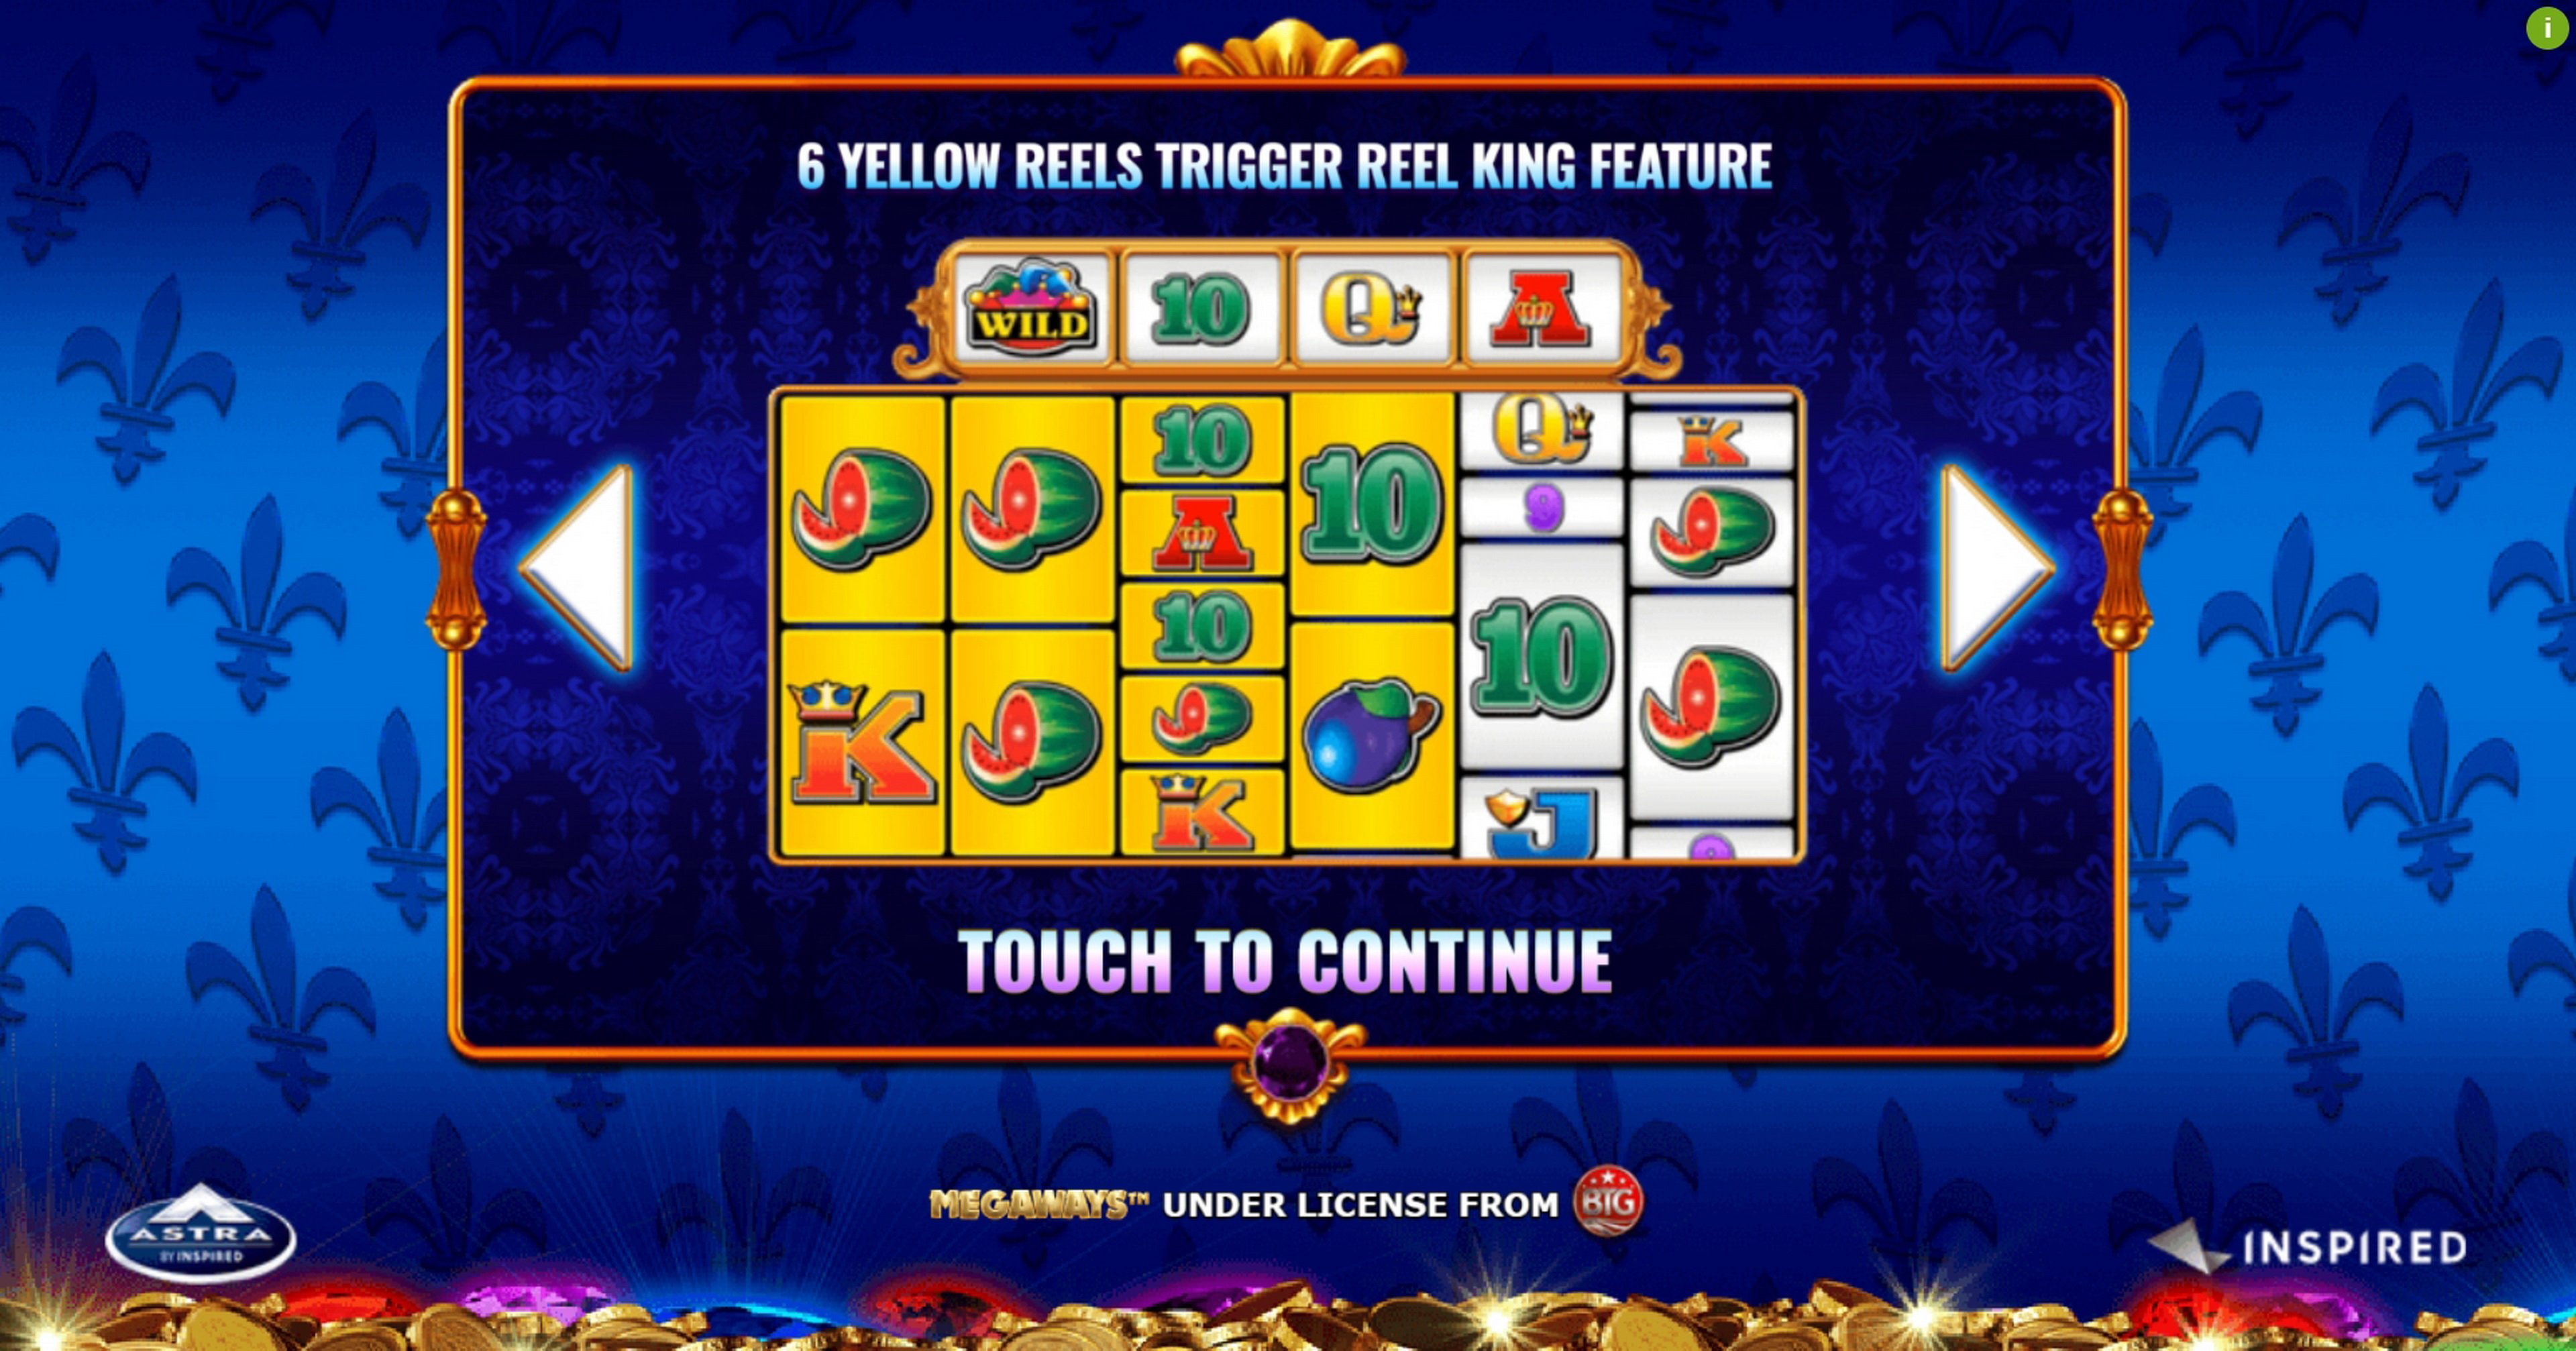 Play Reel King Megaways Free Casino Slot Game by Inspired Gaming